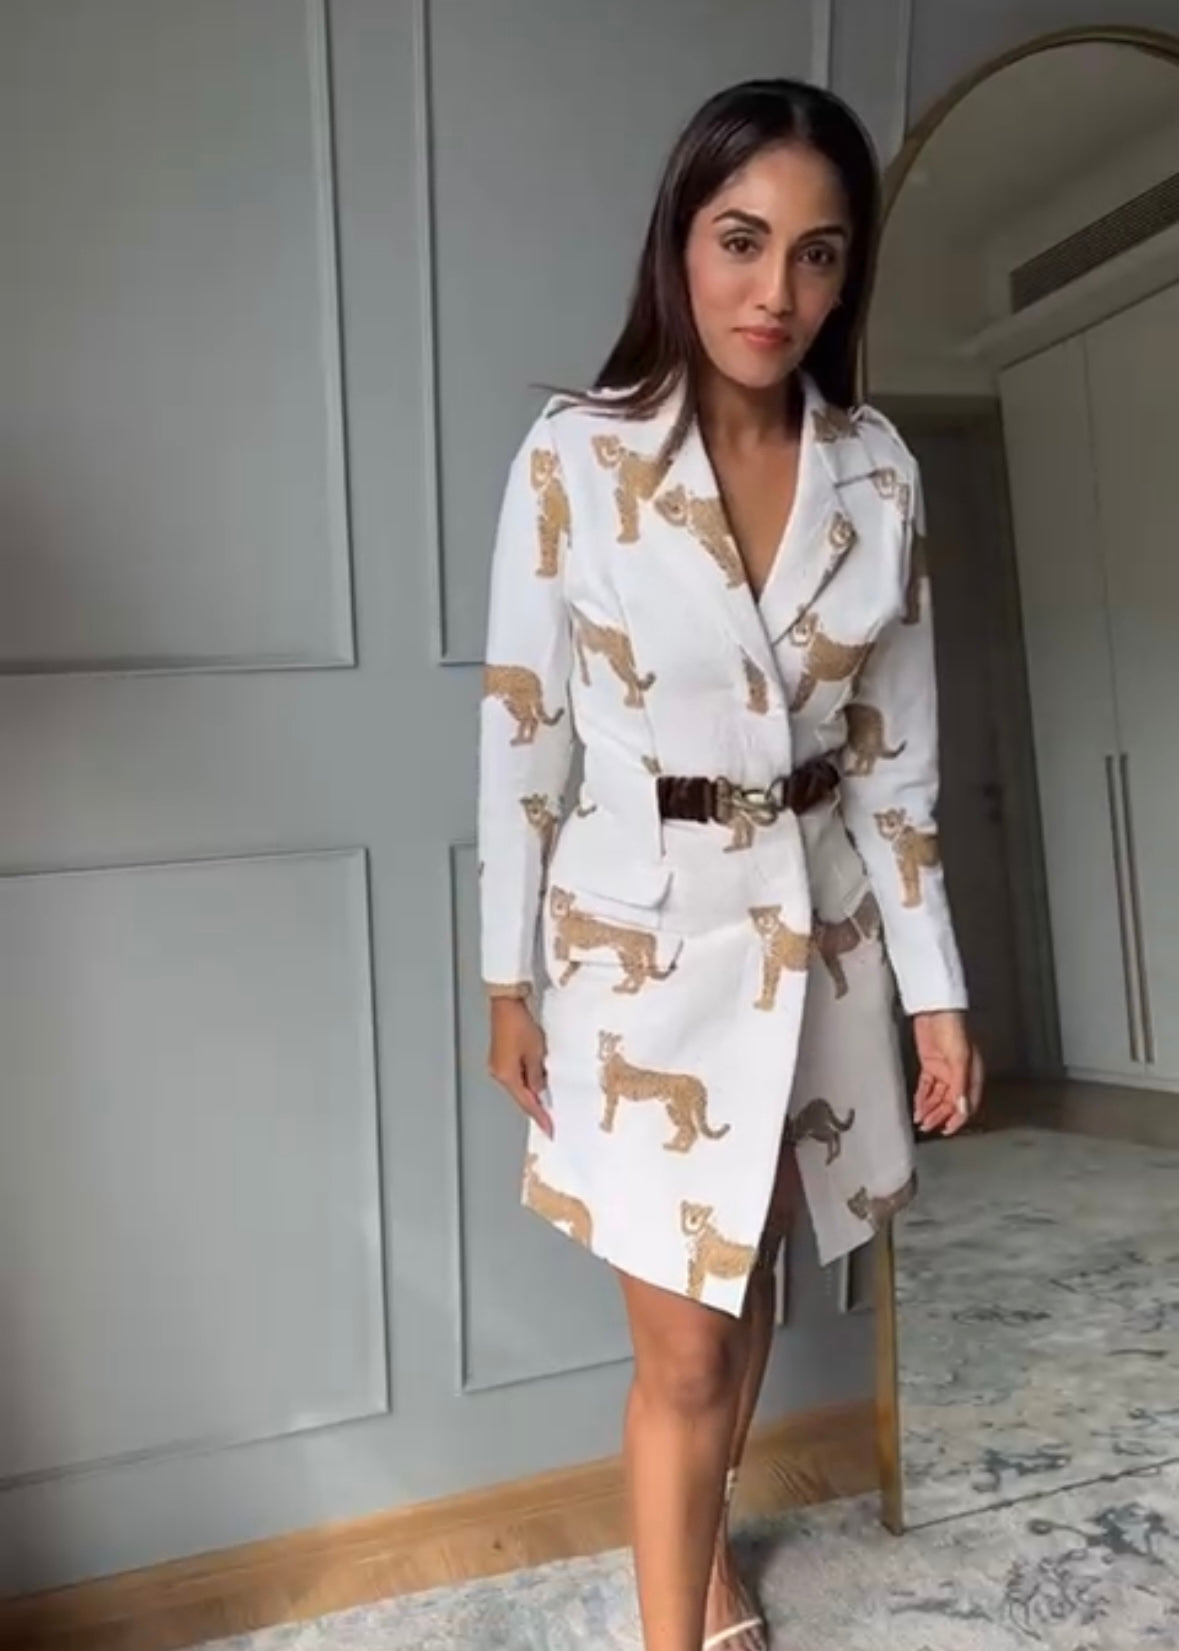 SHRIMA RAI- The White cheetah Coat Dress With Belt